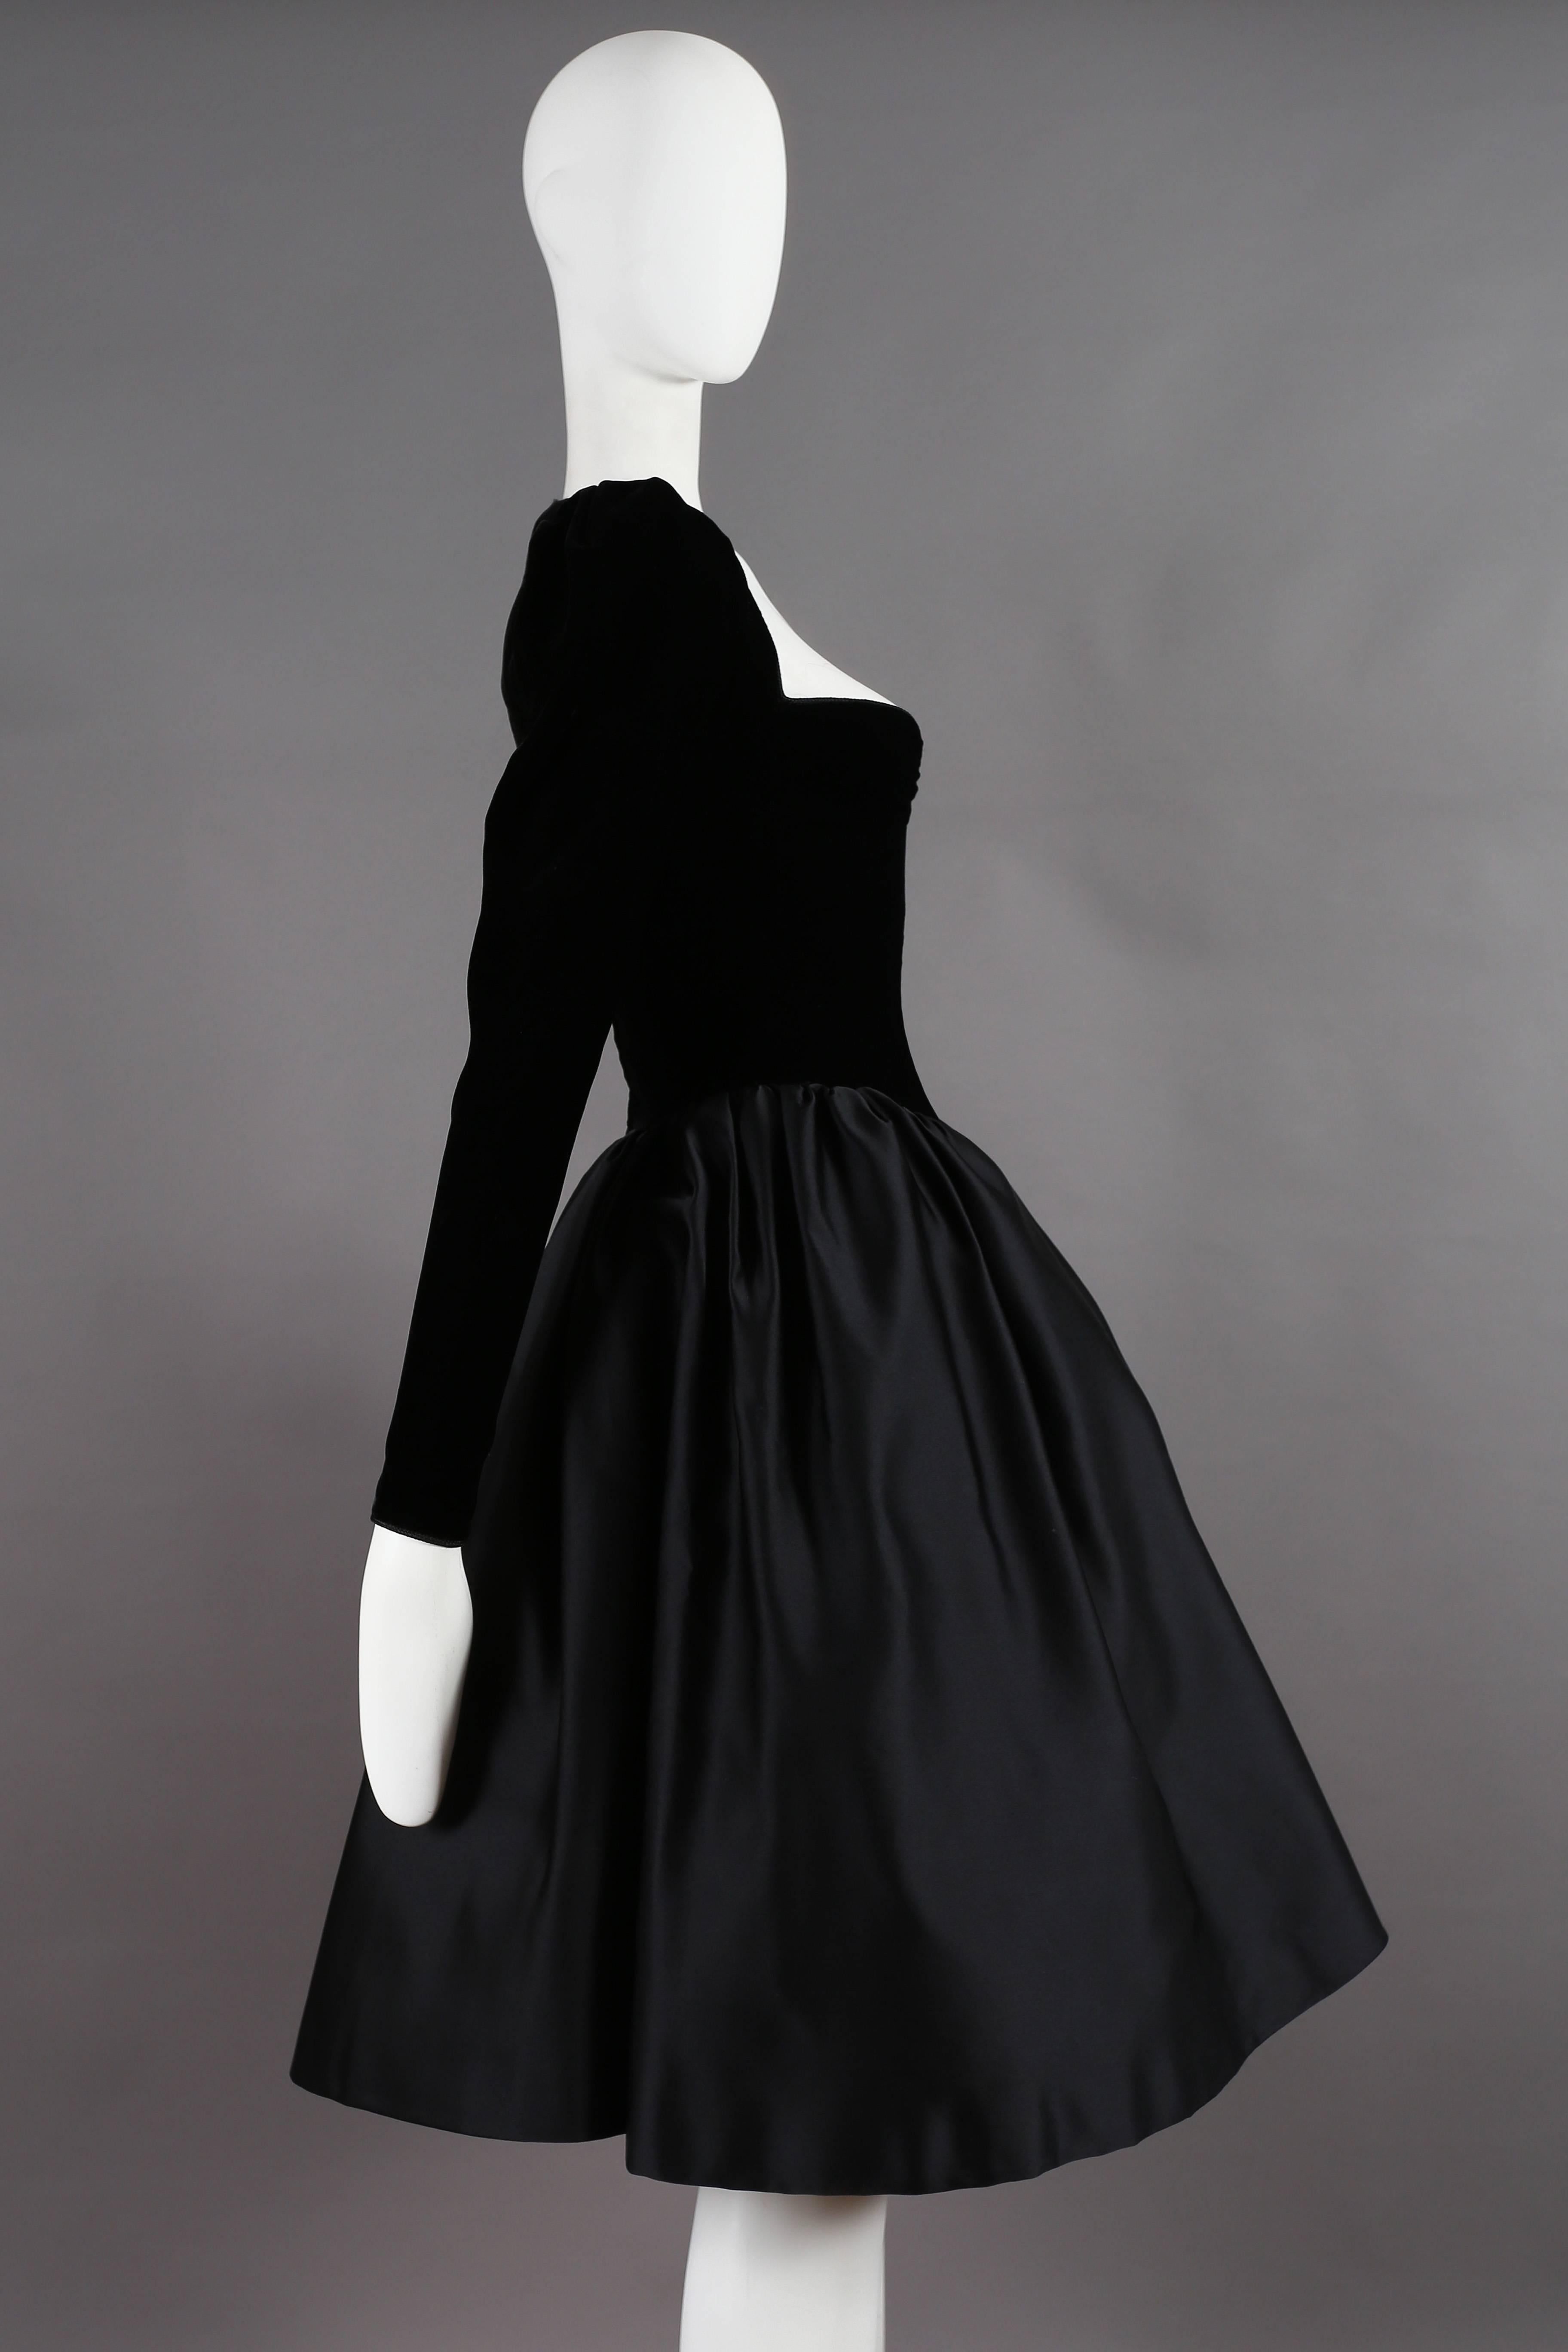 Women's Yves Saint Laurent Haute Couture black velvet cocktail dress, circa 1981